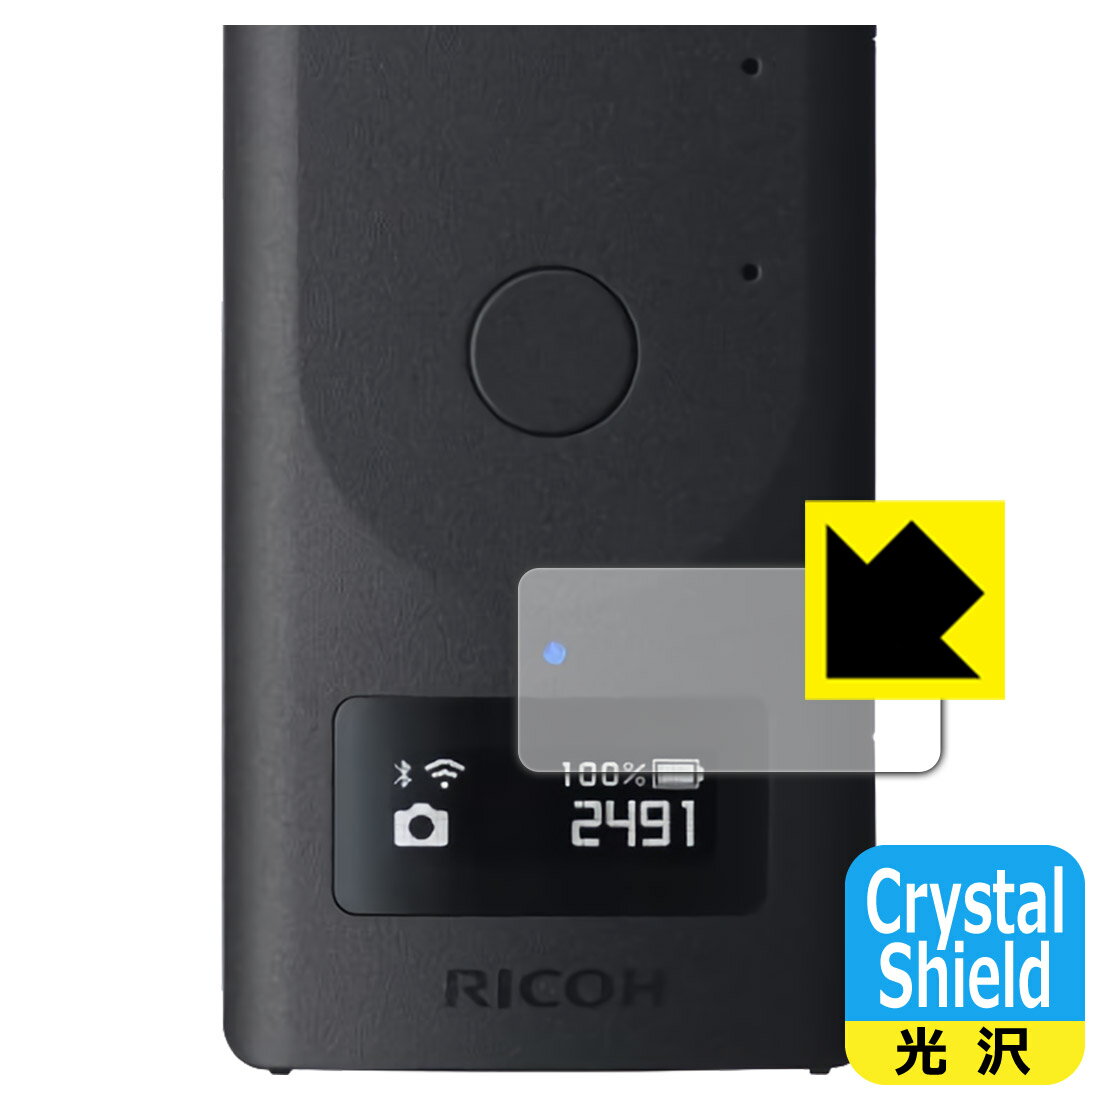 Crystal Shield RICOH THETA Z1 51GB / RICOH THETA